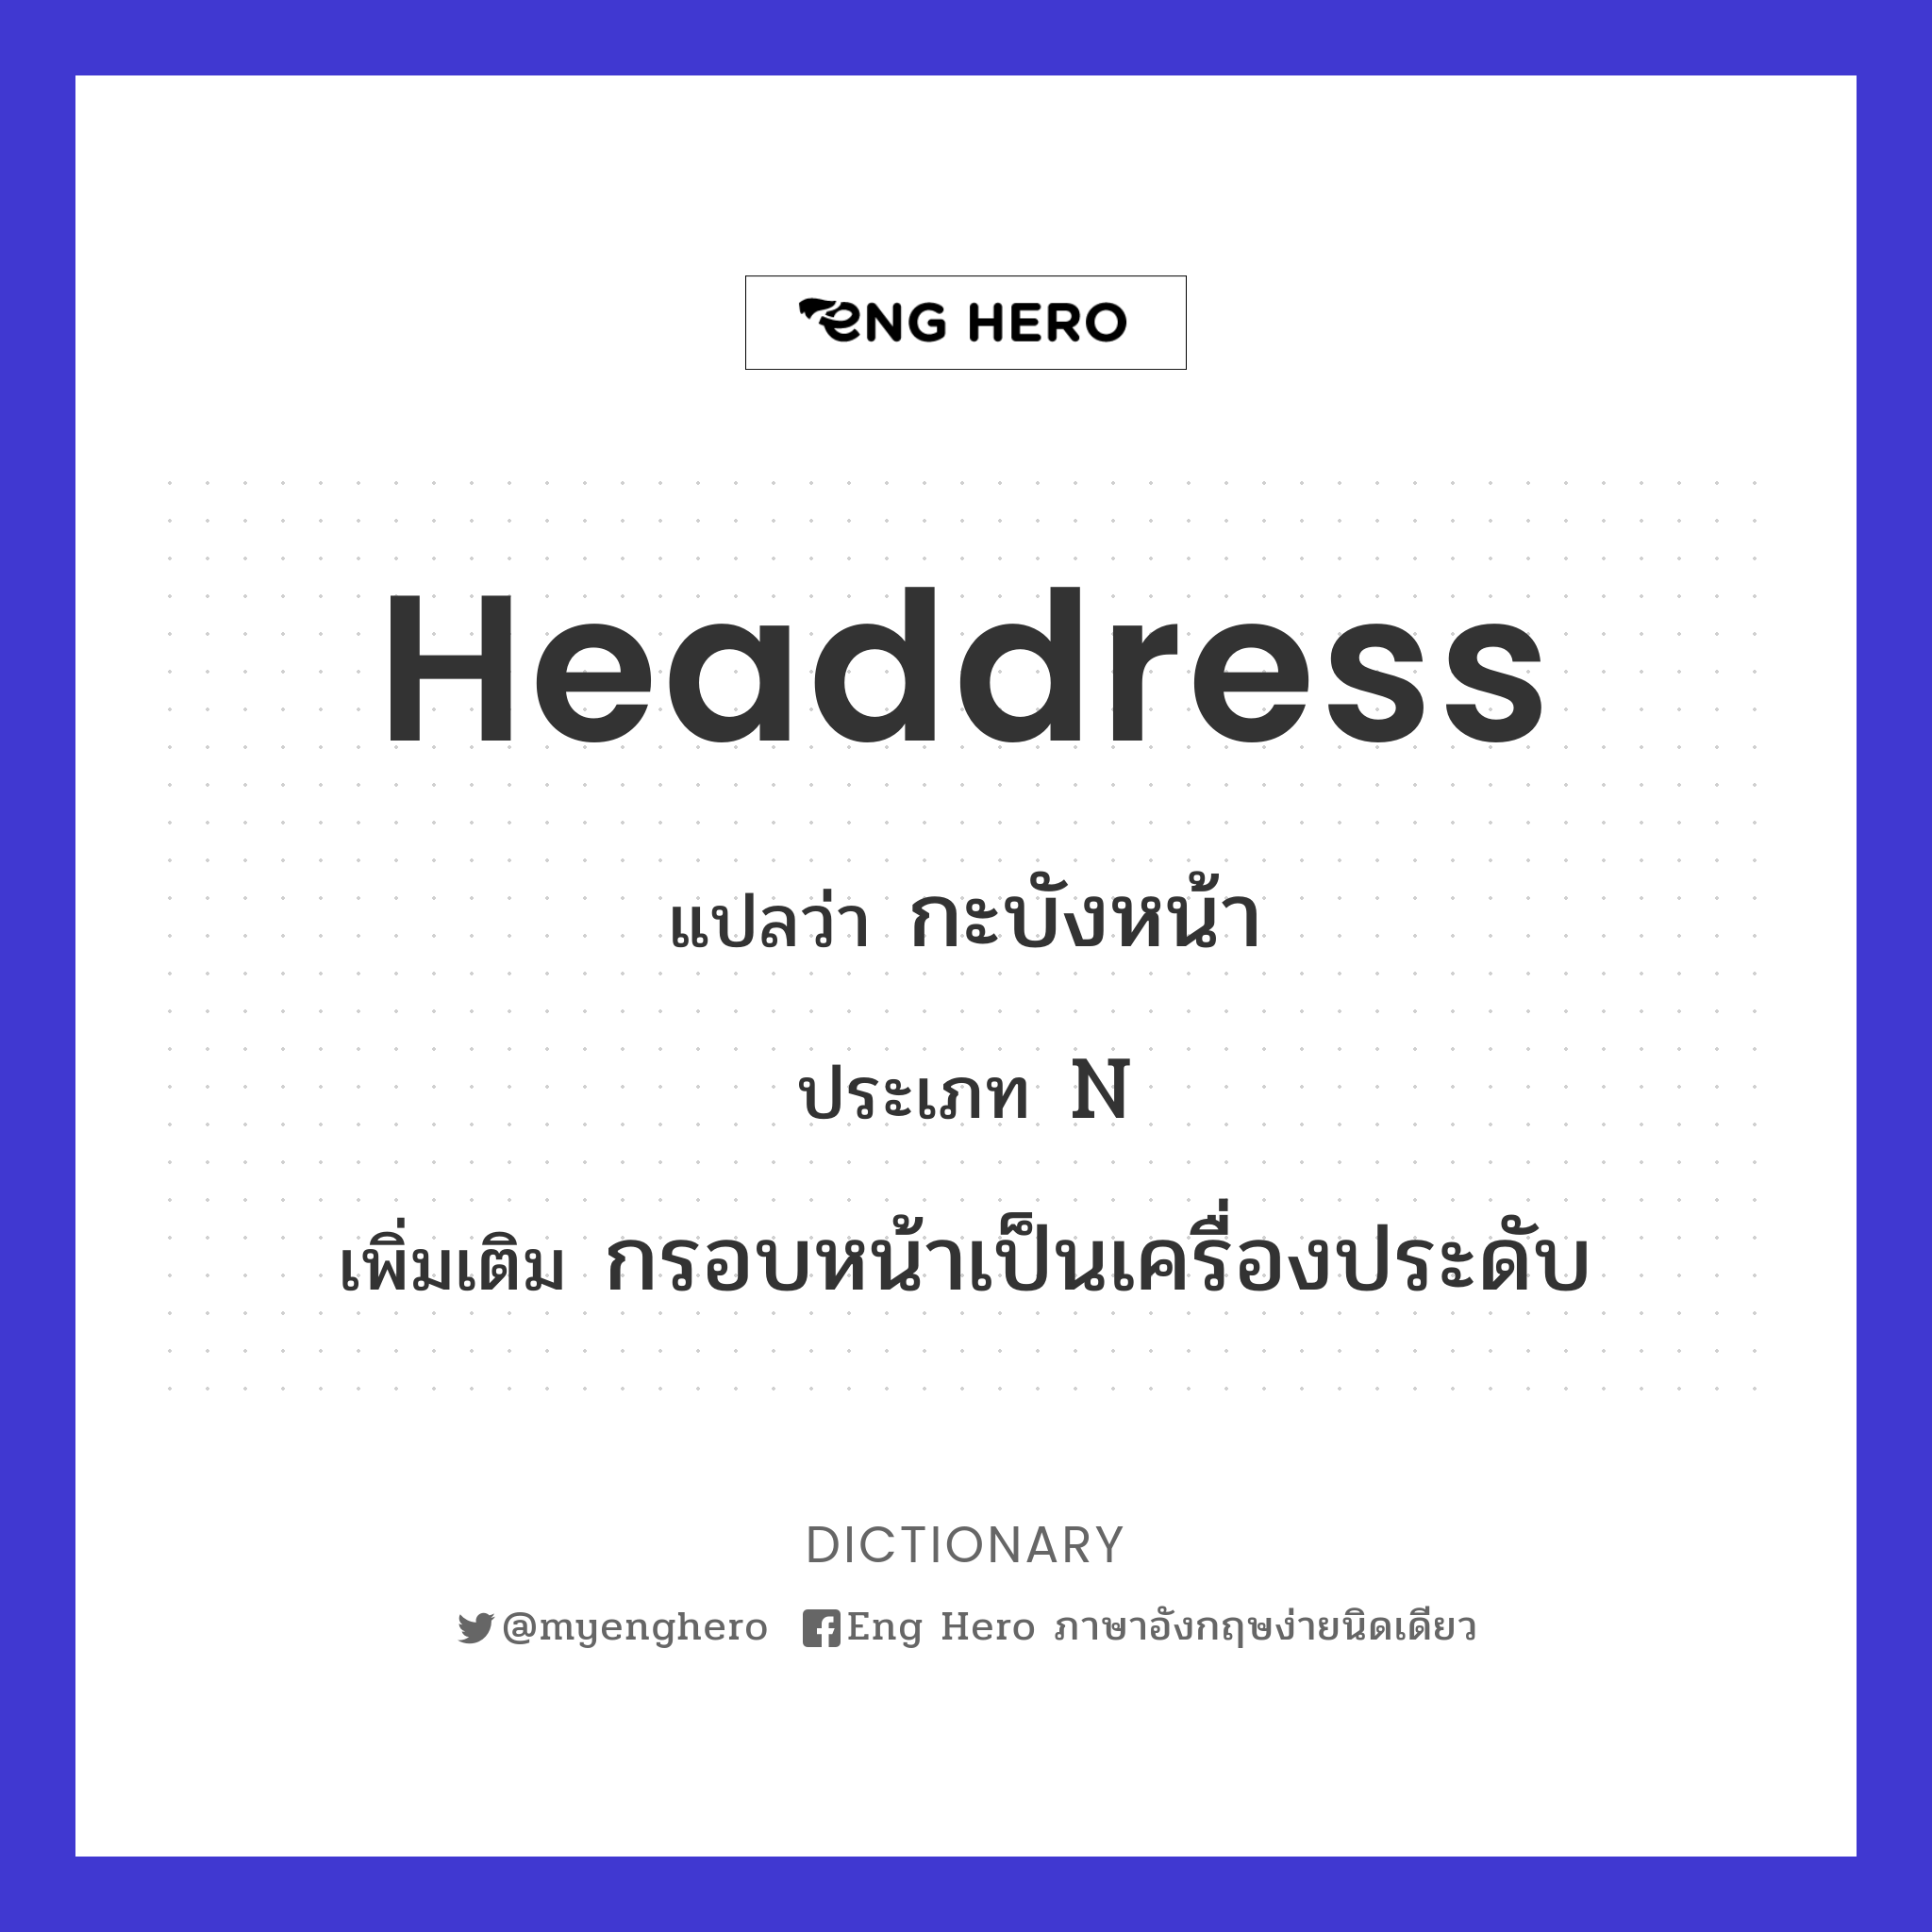 headdress